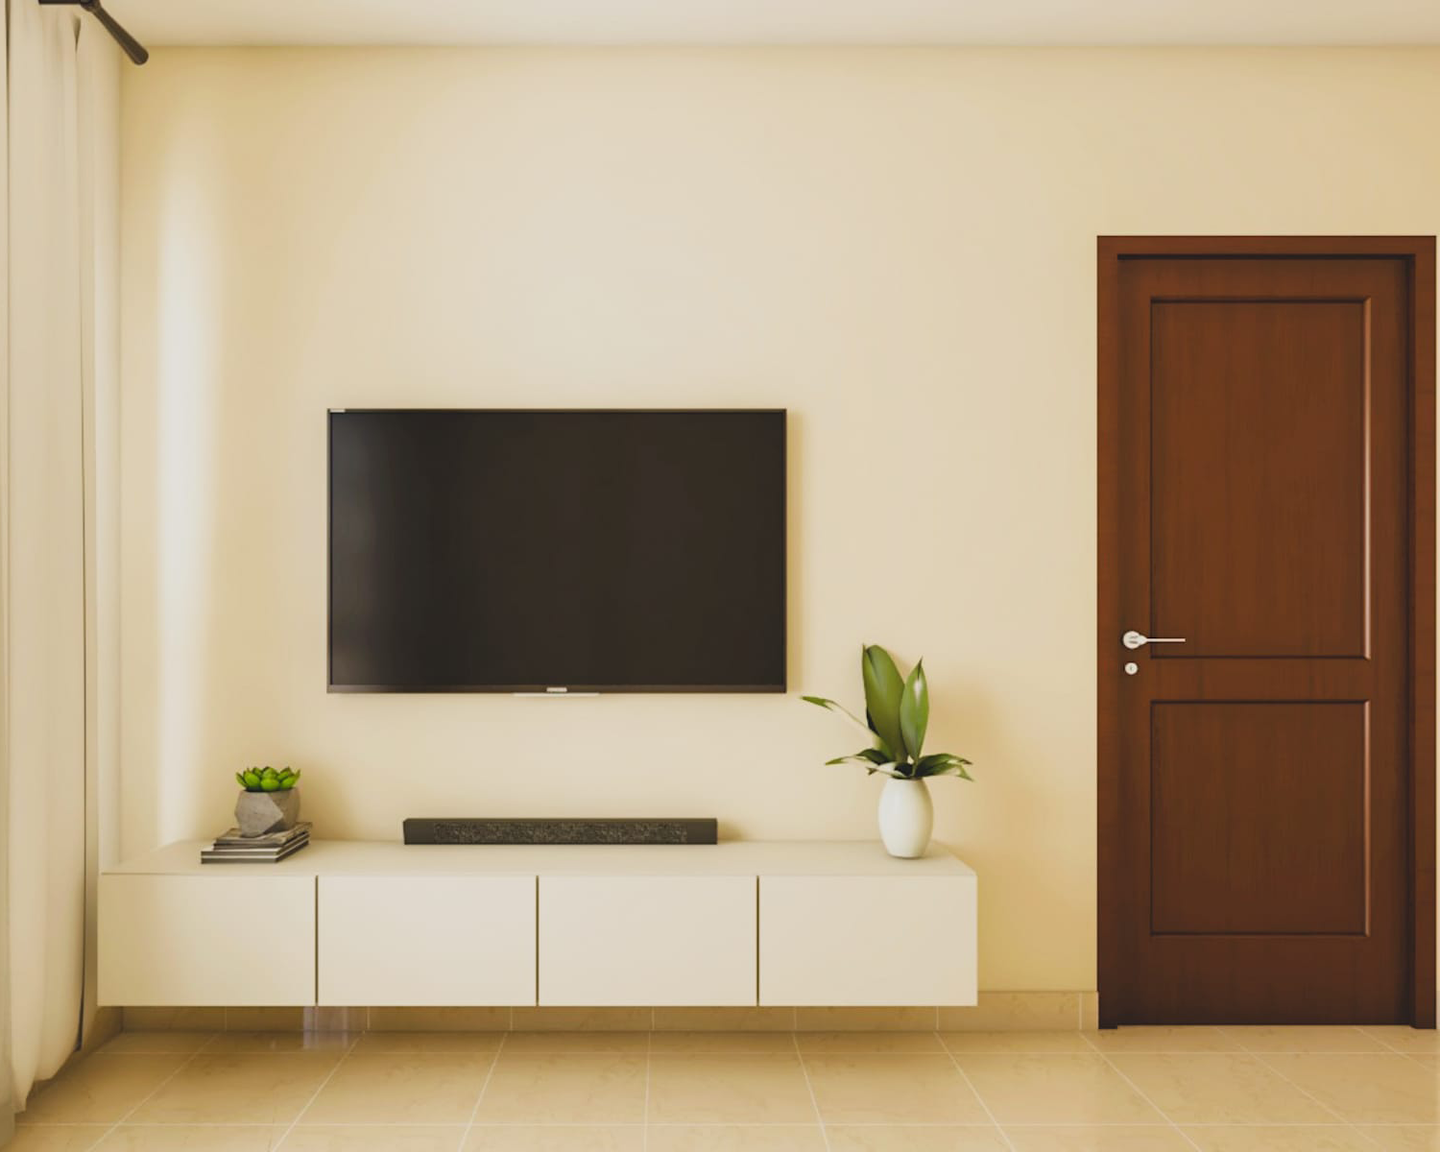 Minimal Master Bedroom Interior Design with Wardrobe and Dresser - Livspace